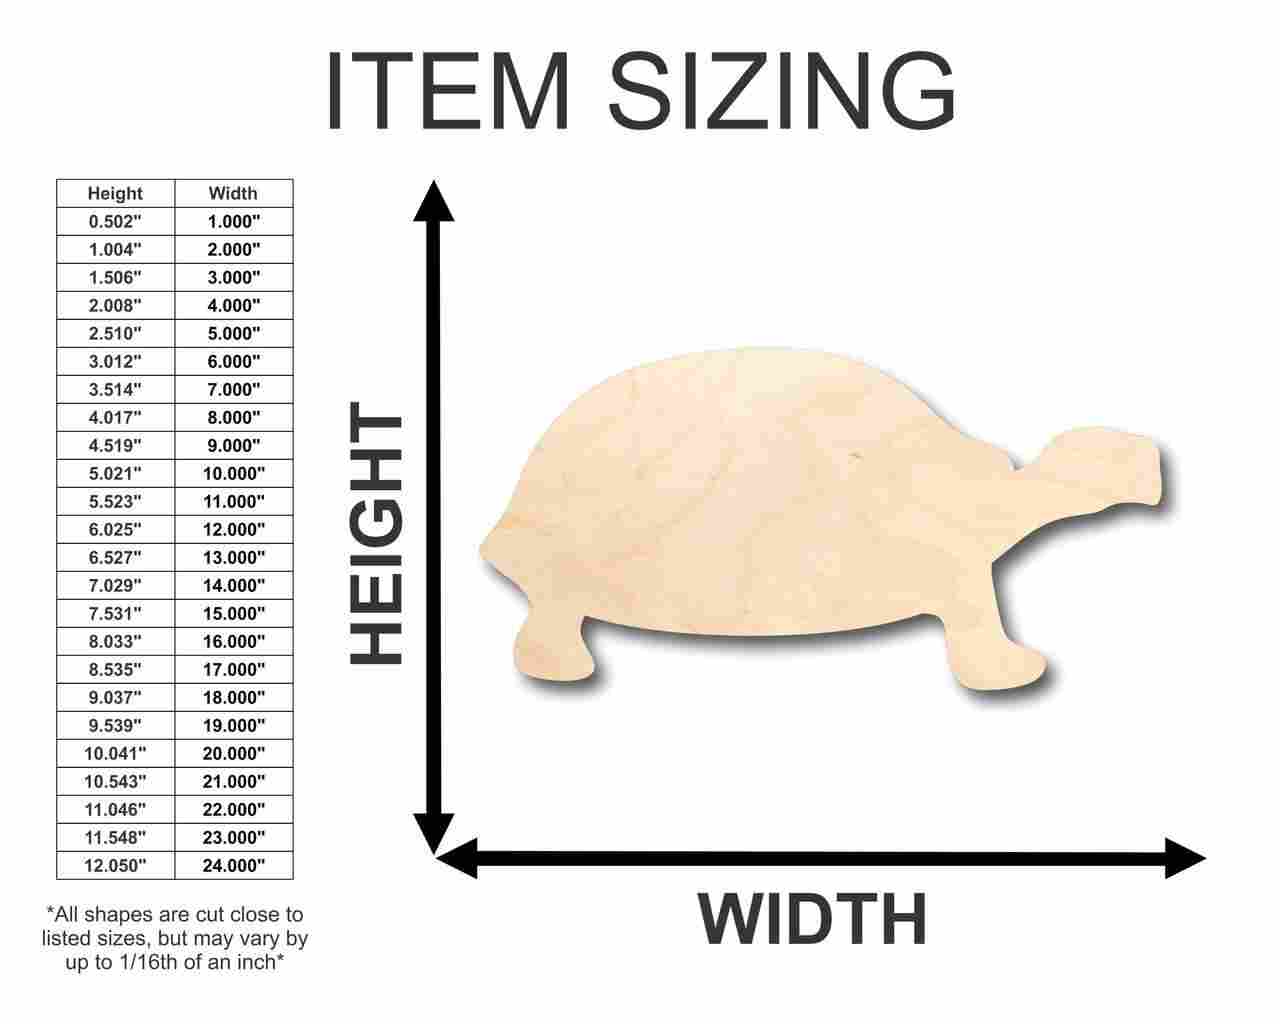 Unfinished Wooden Tortoise Shape - Animal - Craft - up to 24